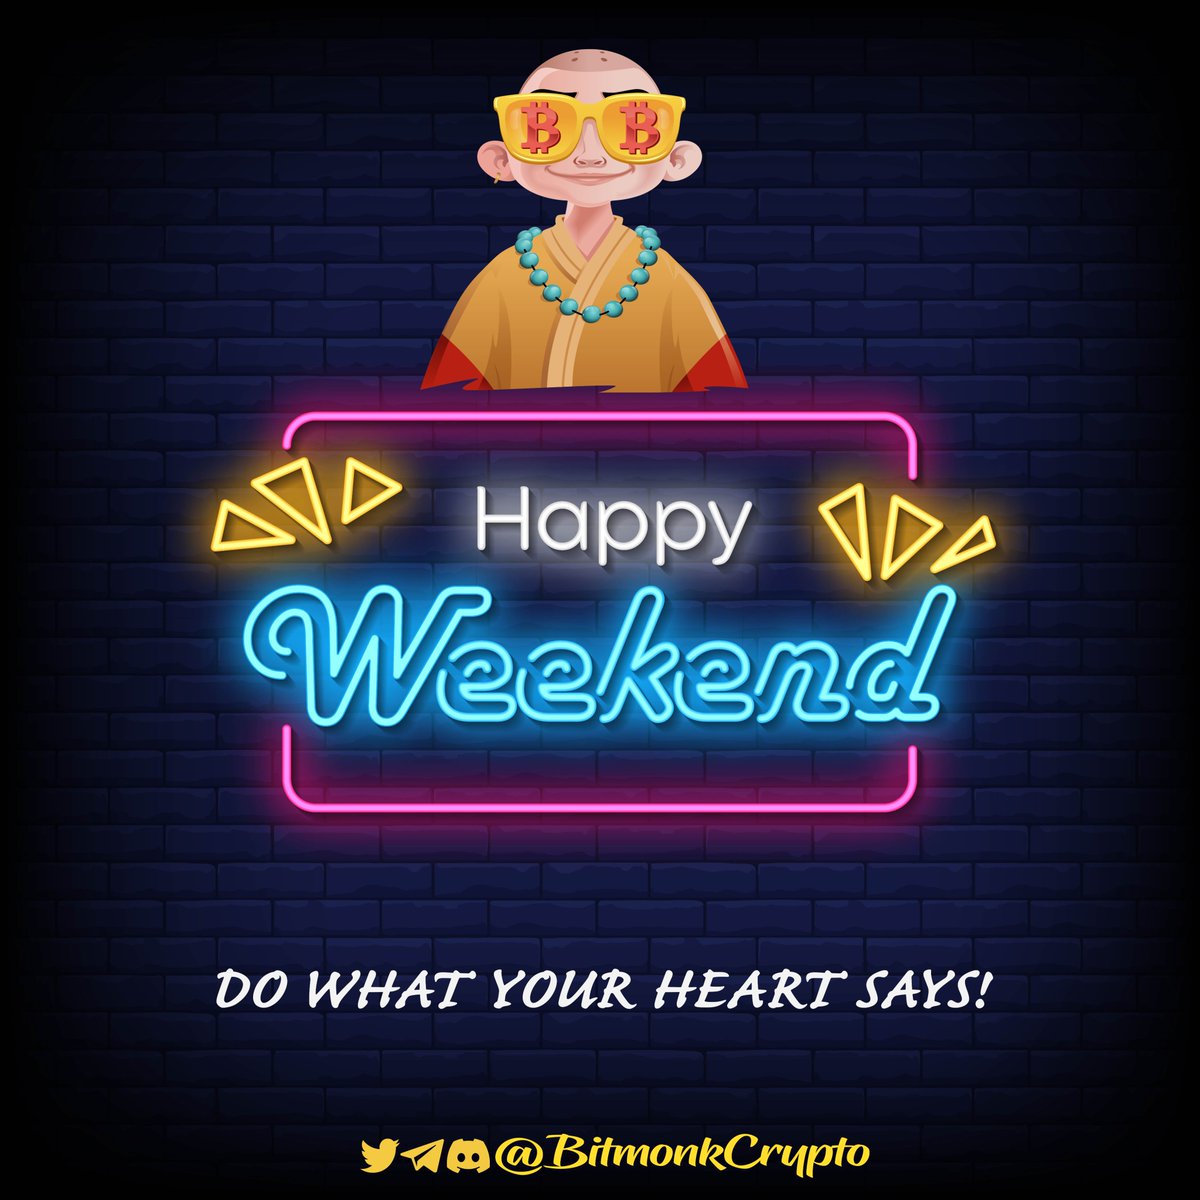 Hey #MonkFamily Happy Weekend to all😃

#WeekendVibes #weekendsunshine #HappyWeekend #EnjoyGreatWeekend